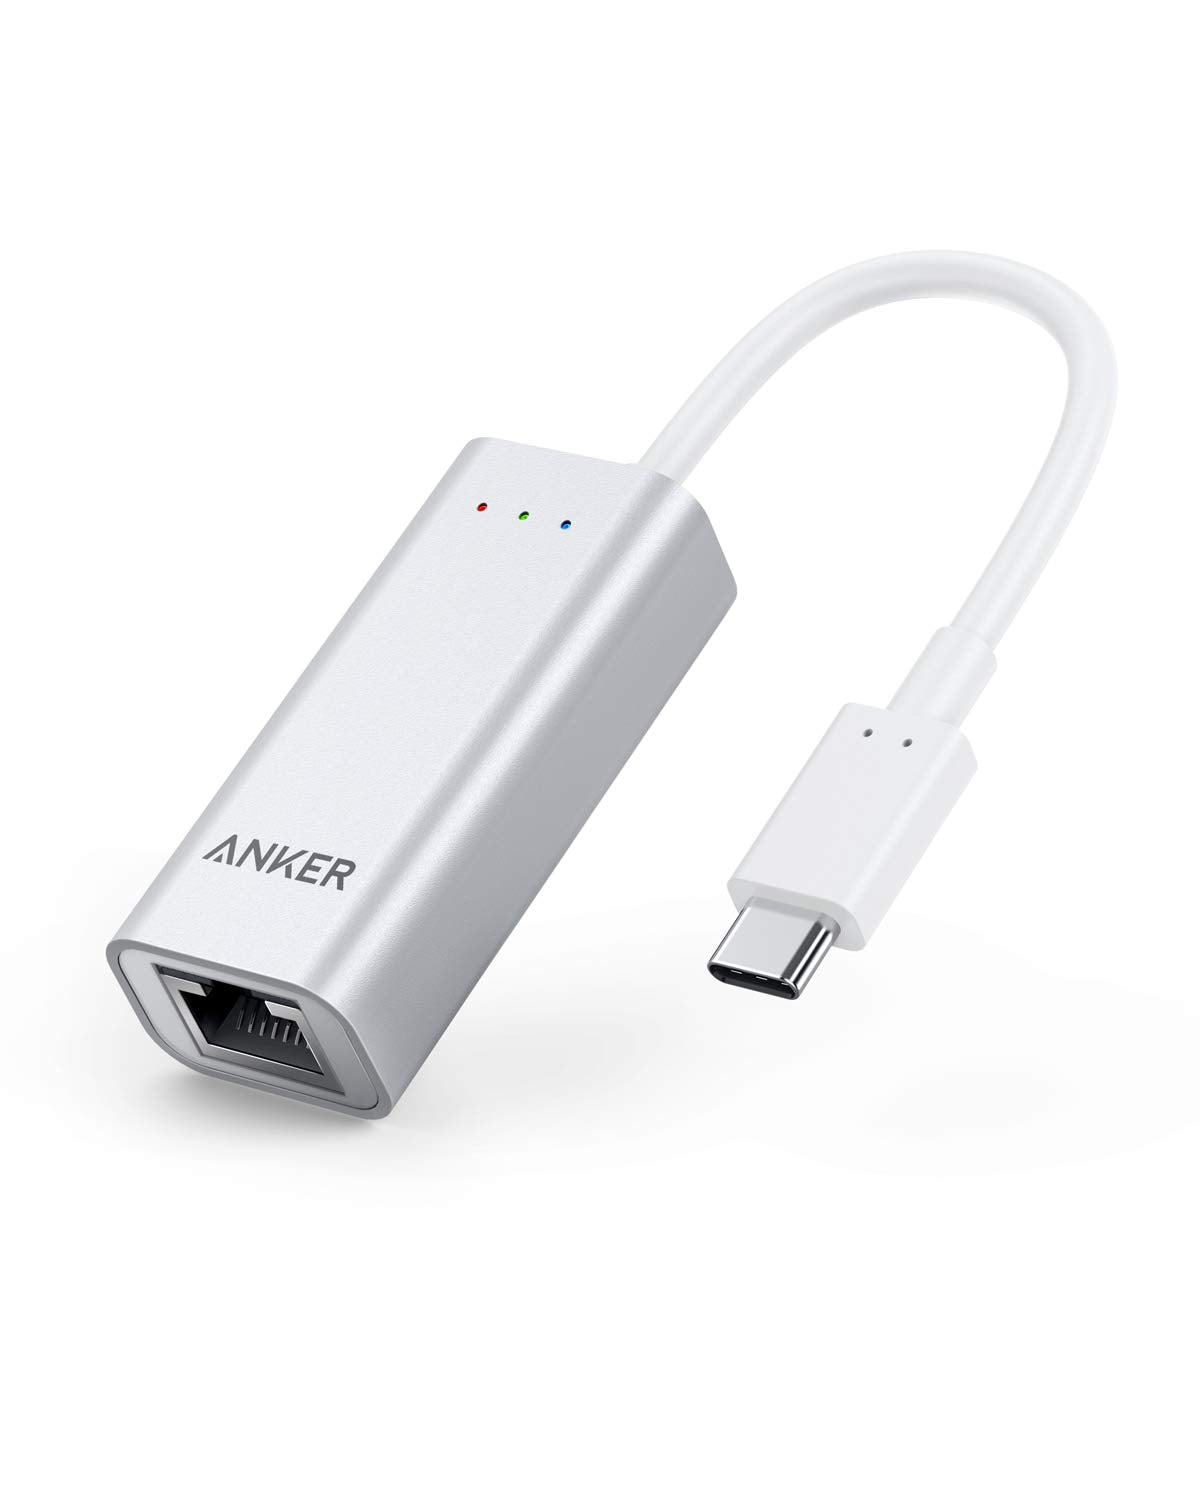 Anker USB-C Aluminum Portable Gigabit Ethernet Port Network Adapter for MacBook Pro